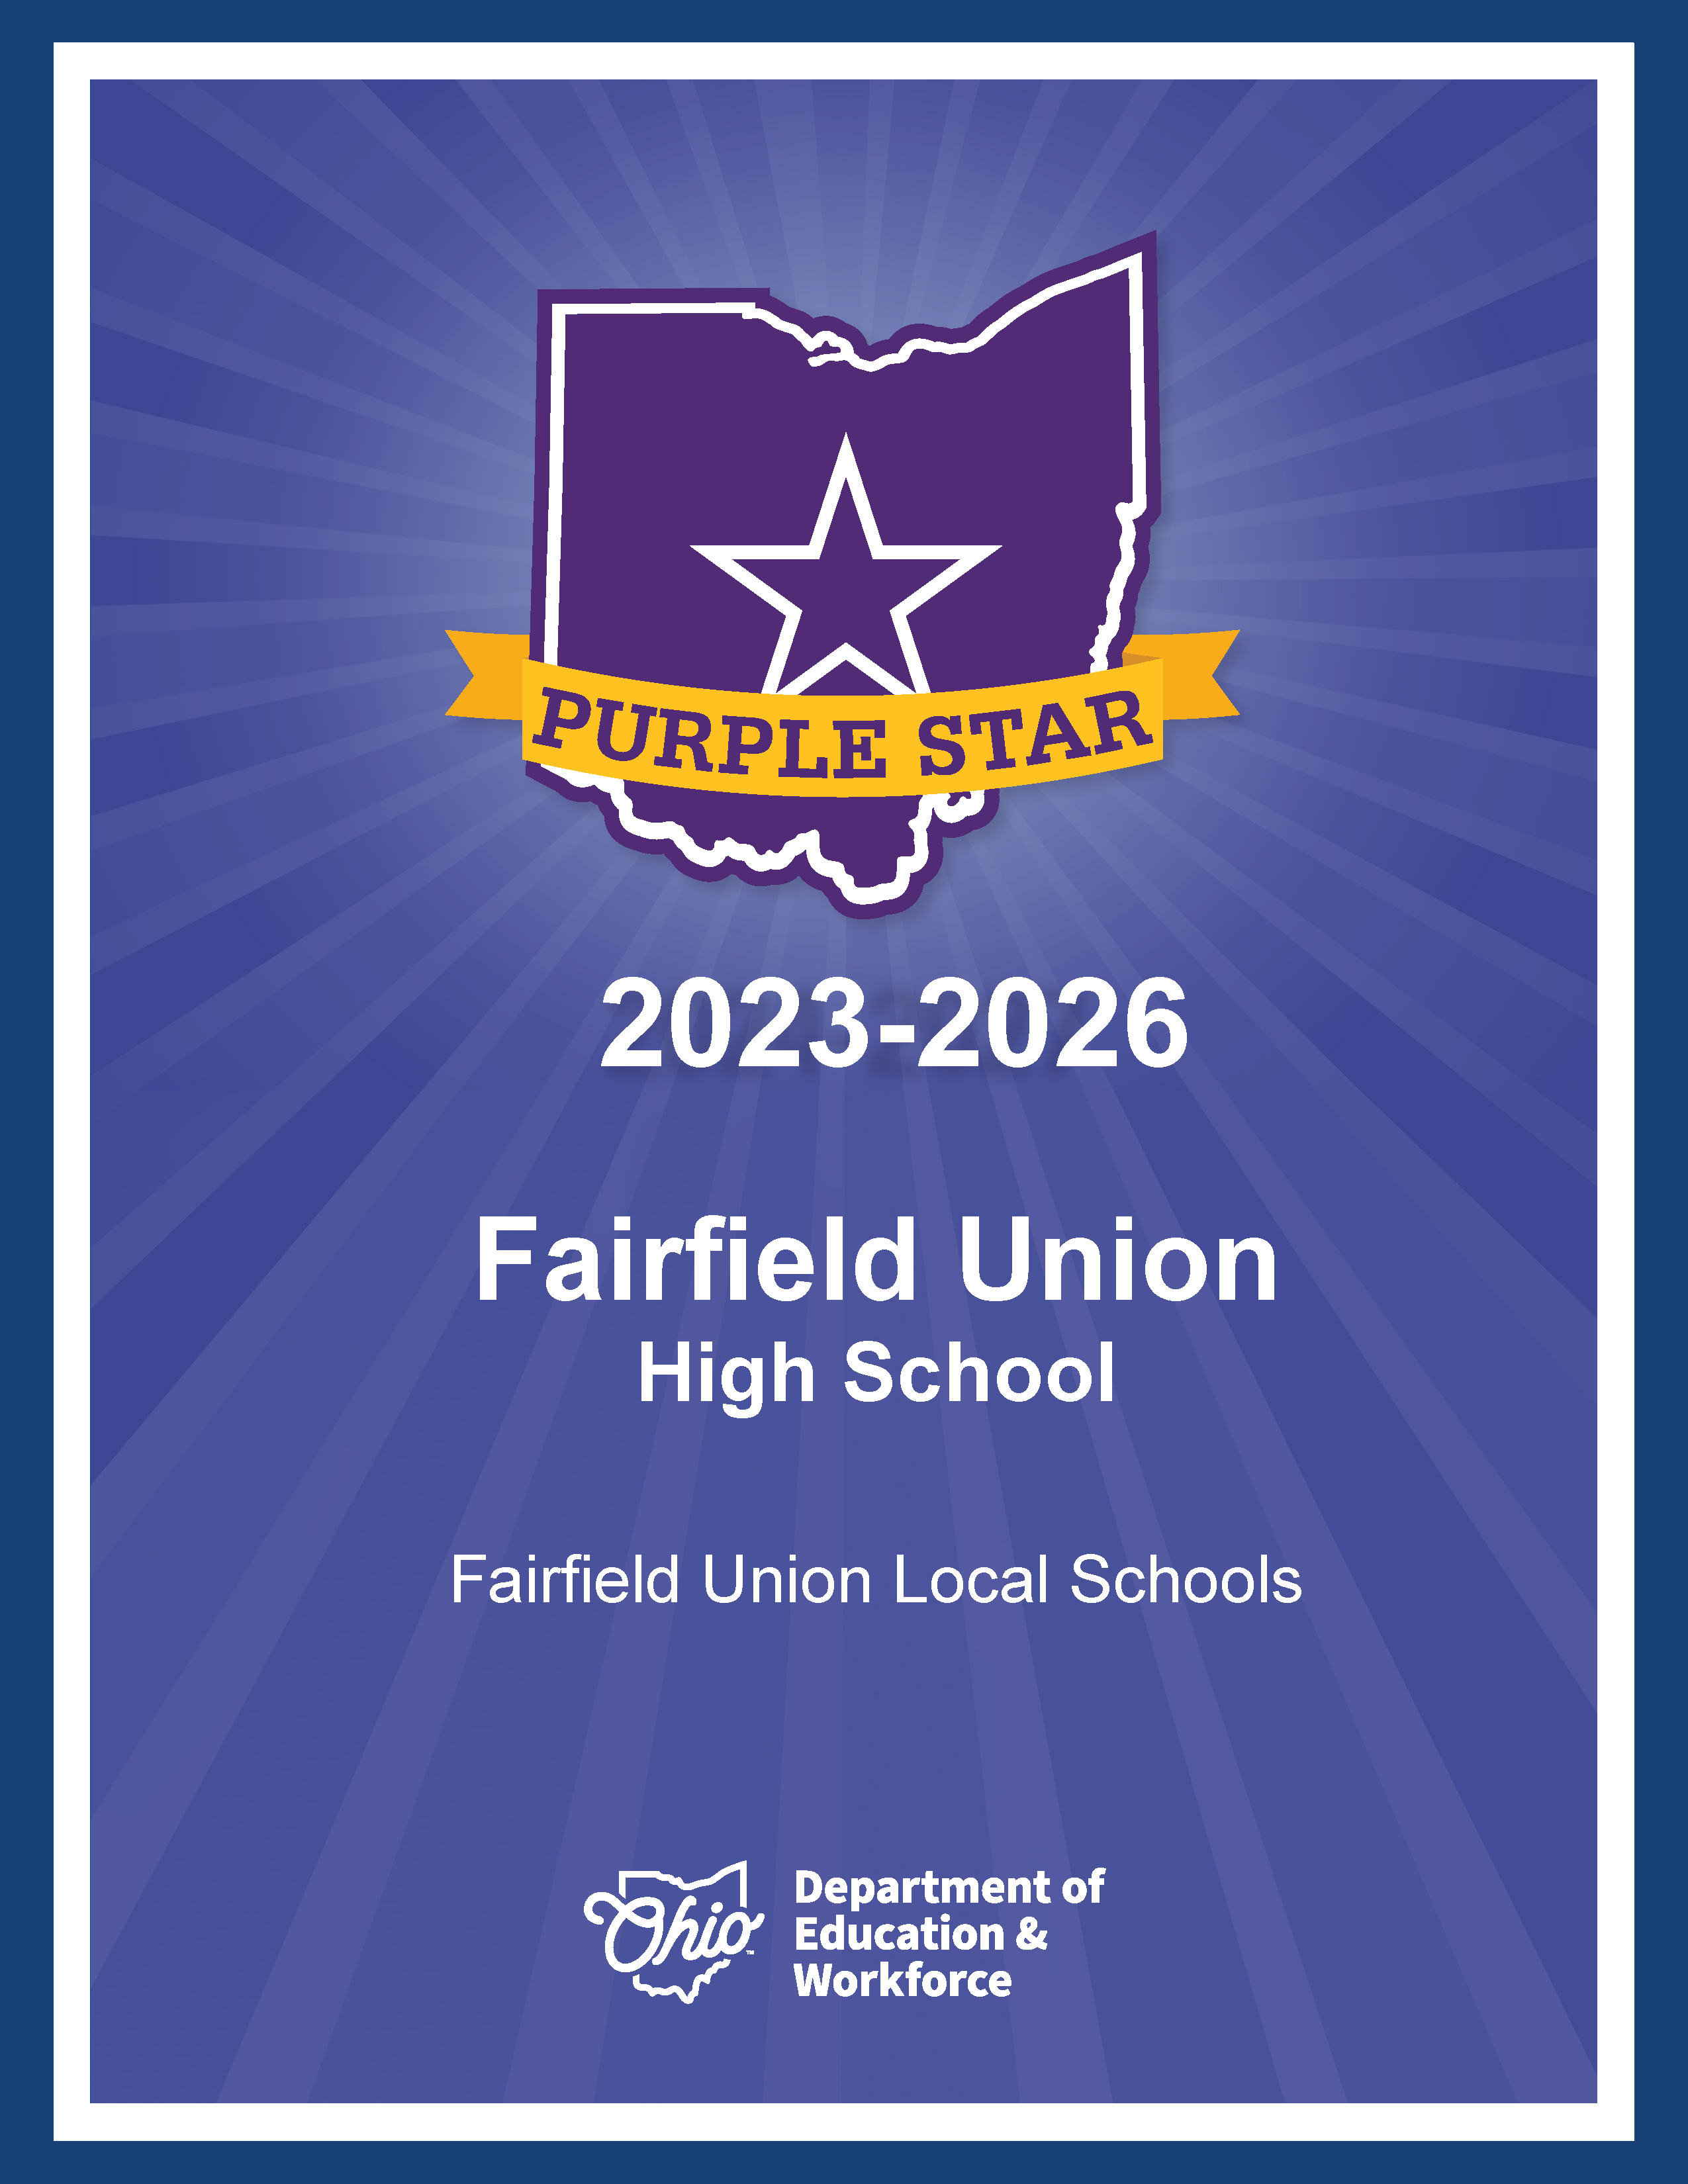 Purple Star Award Winner 2023-2026